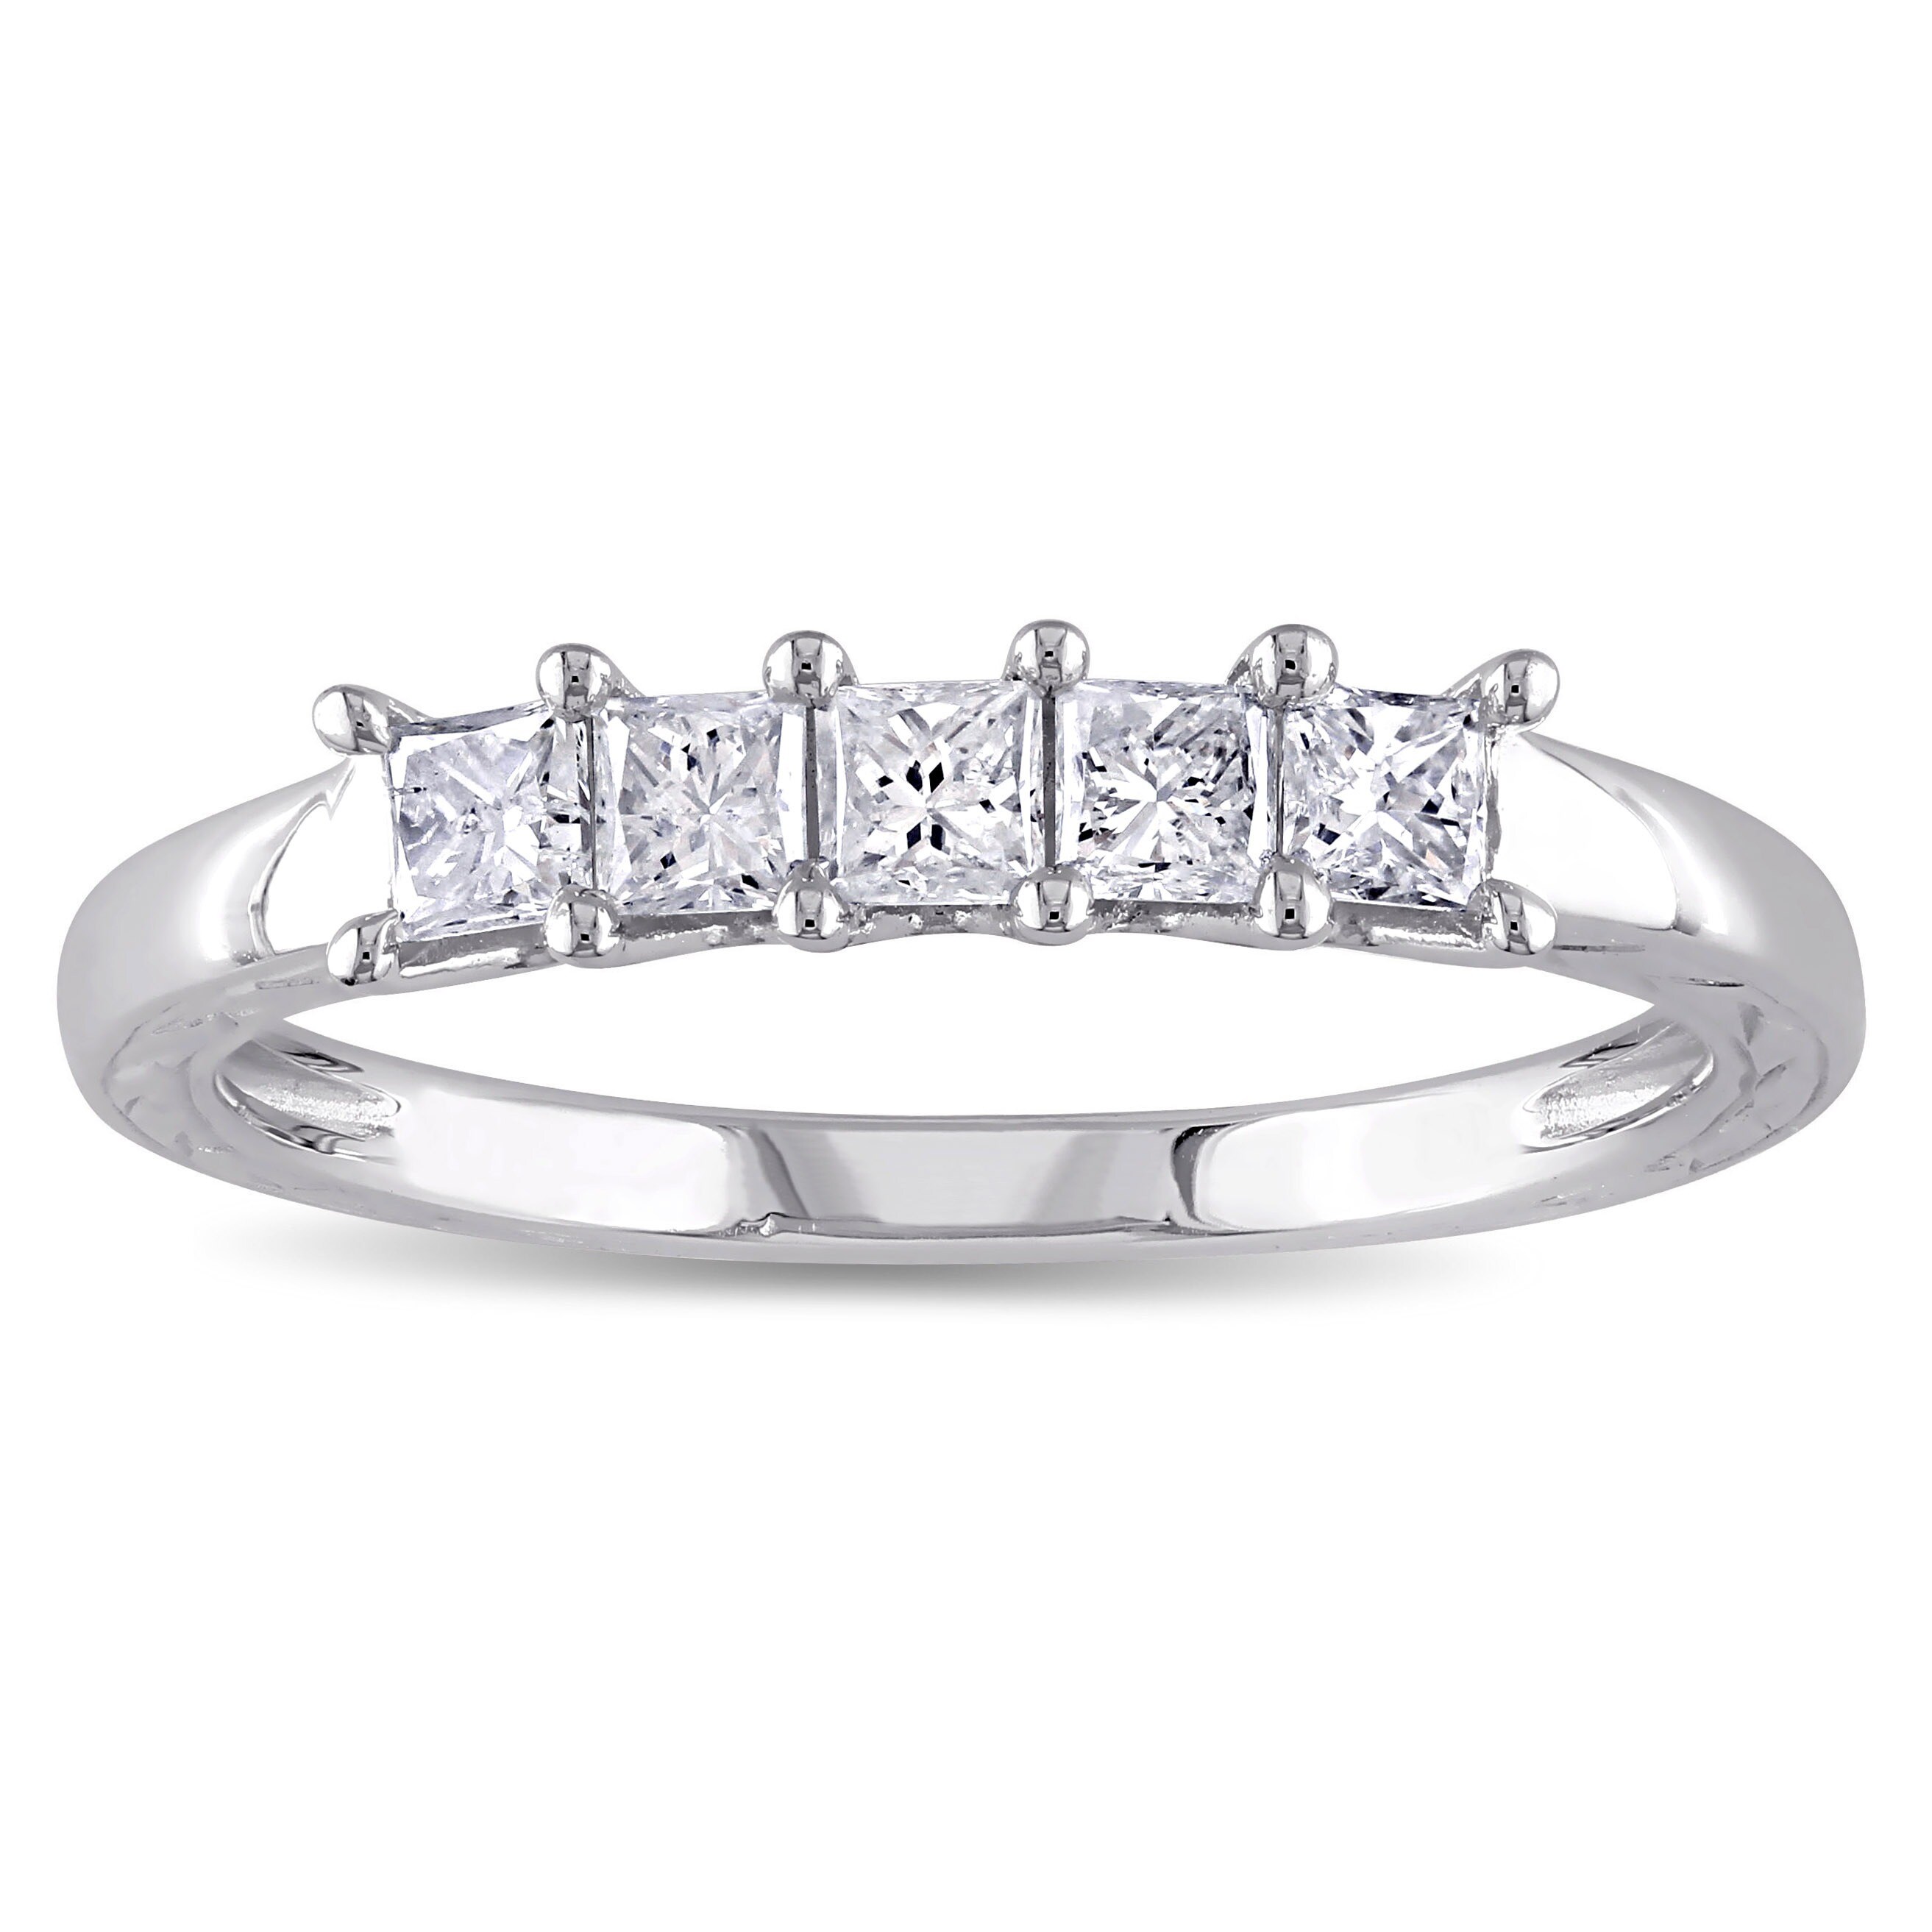 Shop Miadora 10k White Gold 12ct Tdw Diamond Anniversary Ring G H I2 I3 On Sale Free